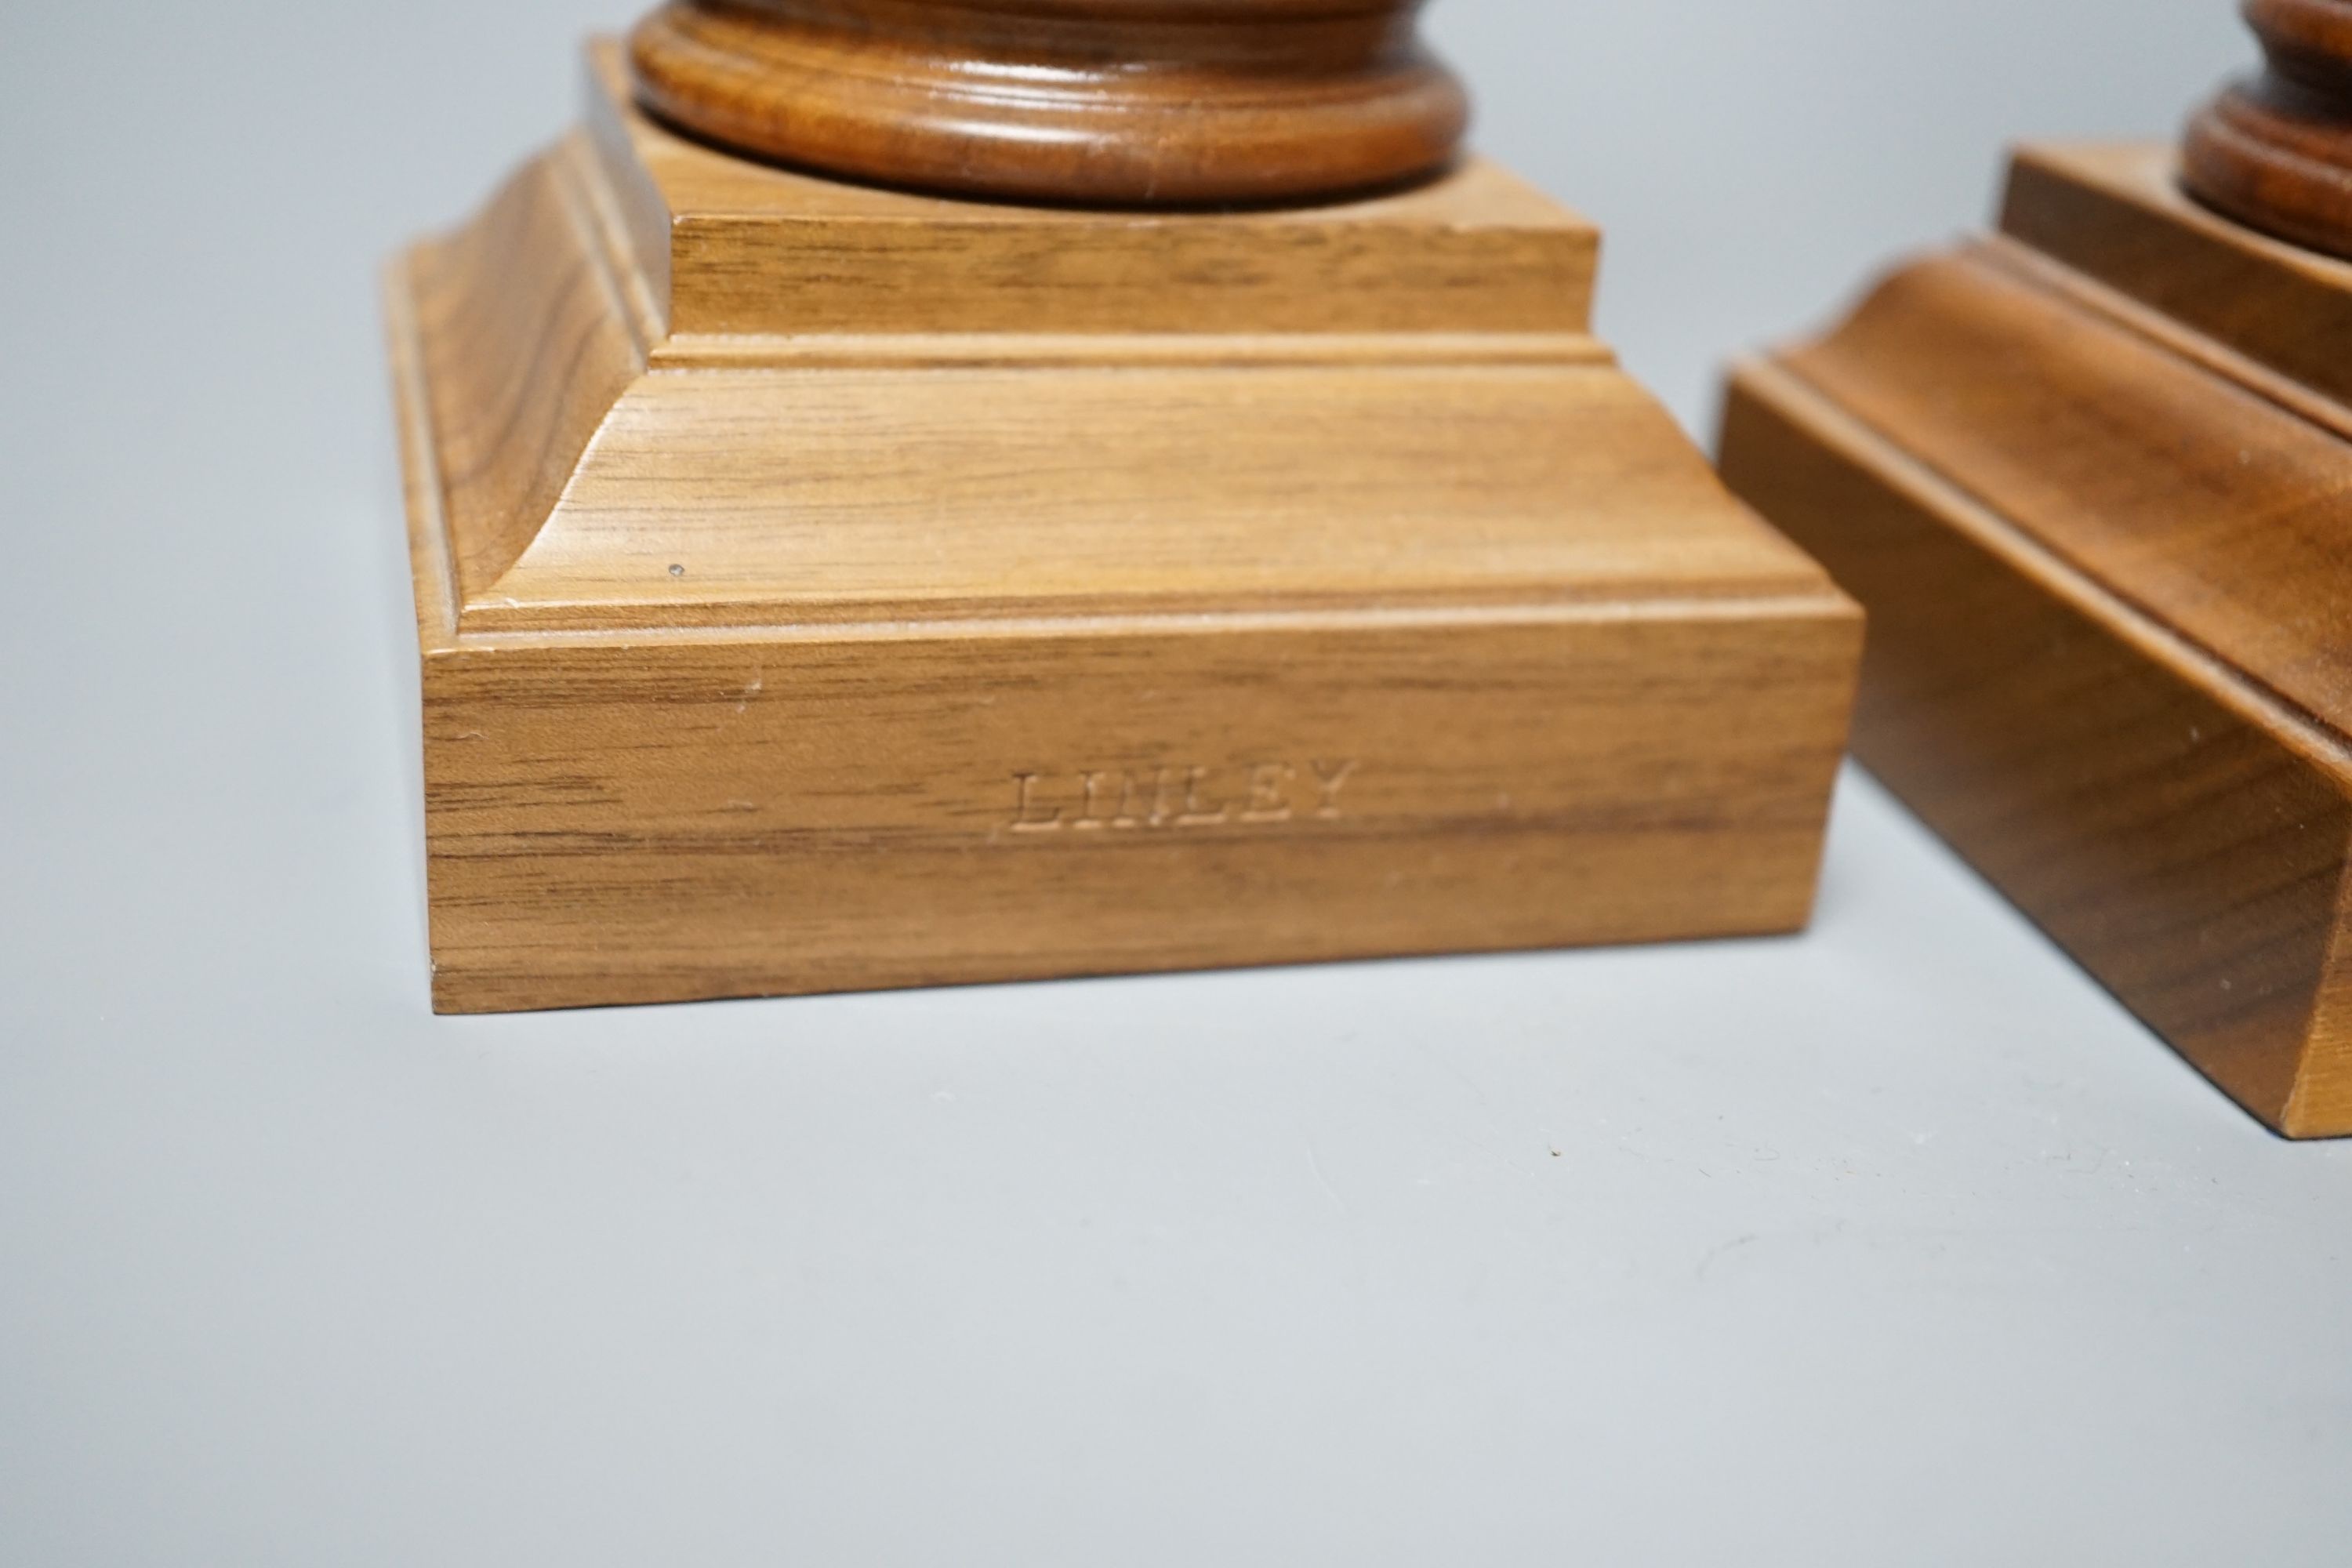 A boxed pair of Linley plinth candlesticks - 30cm high